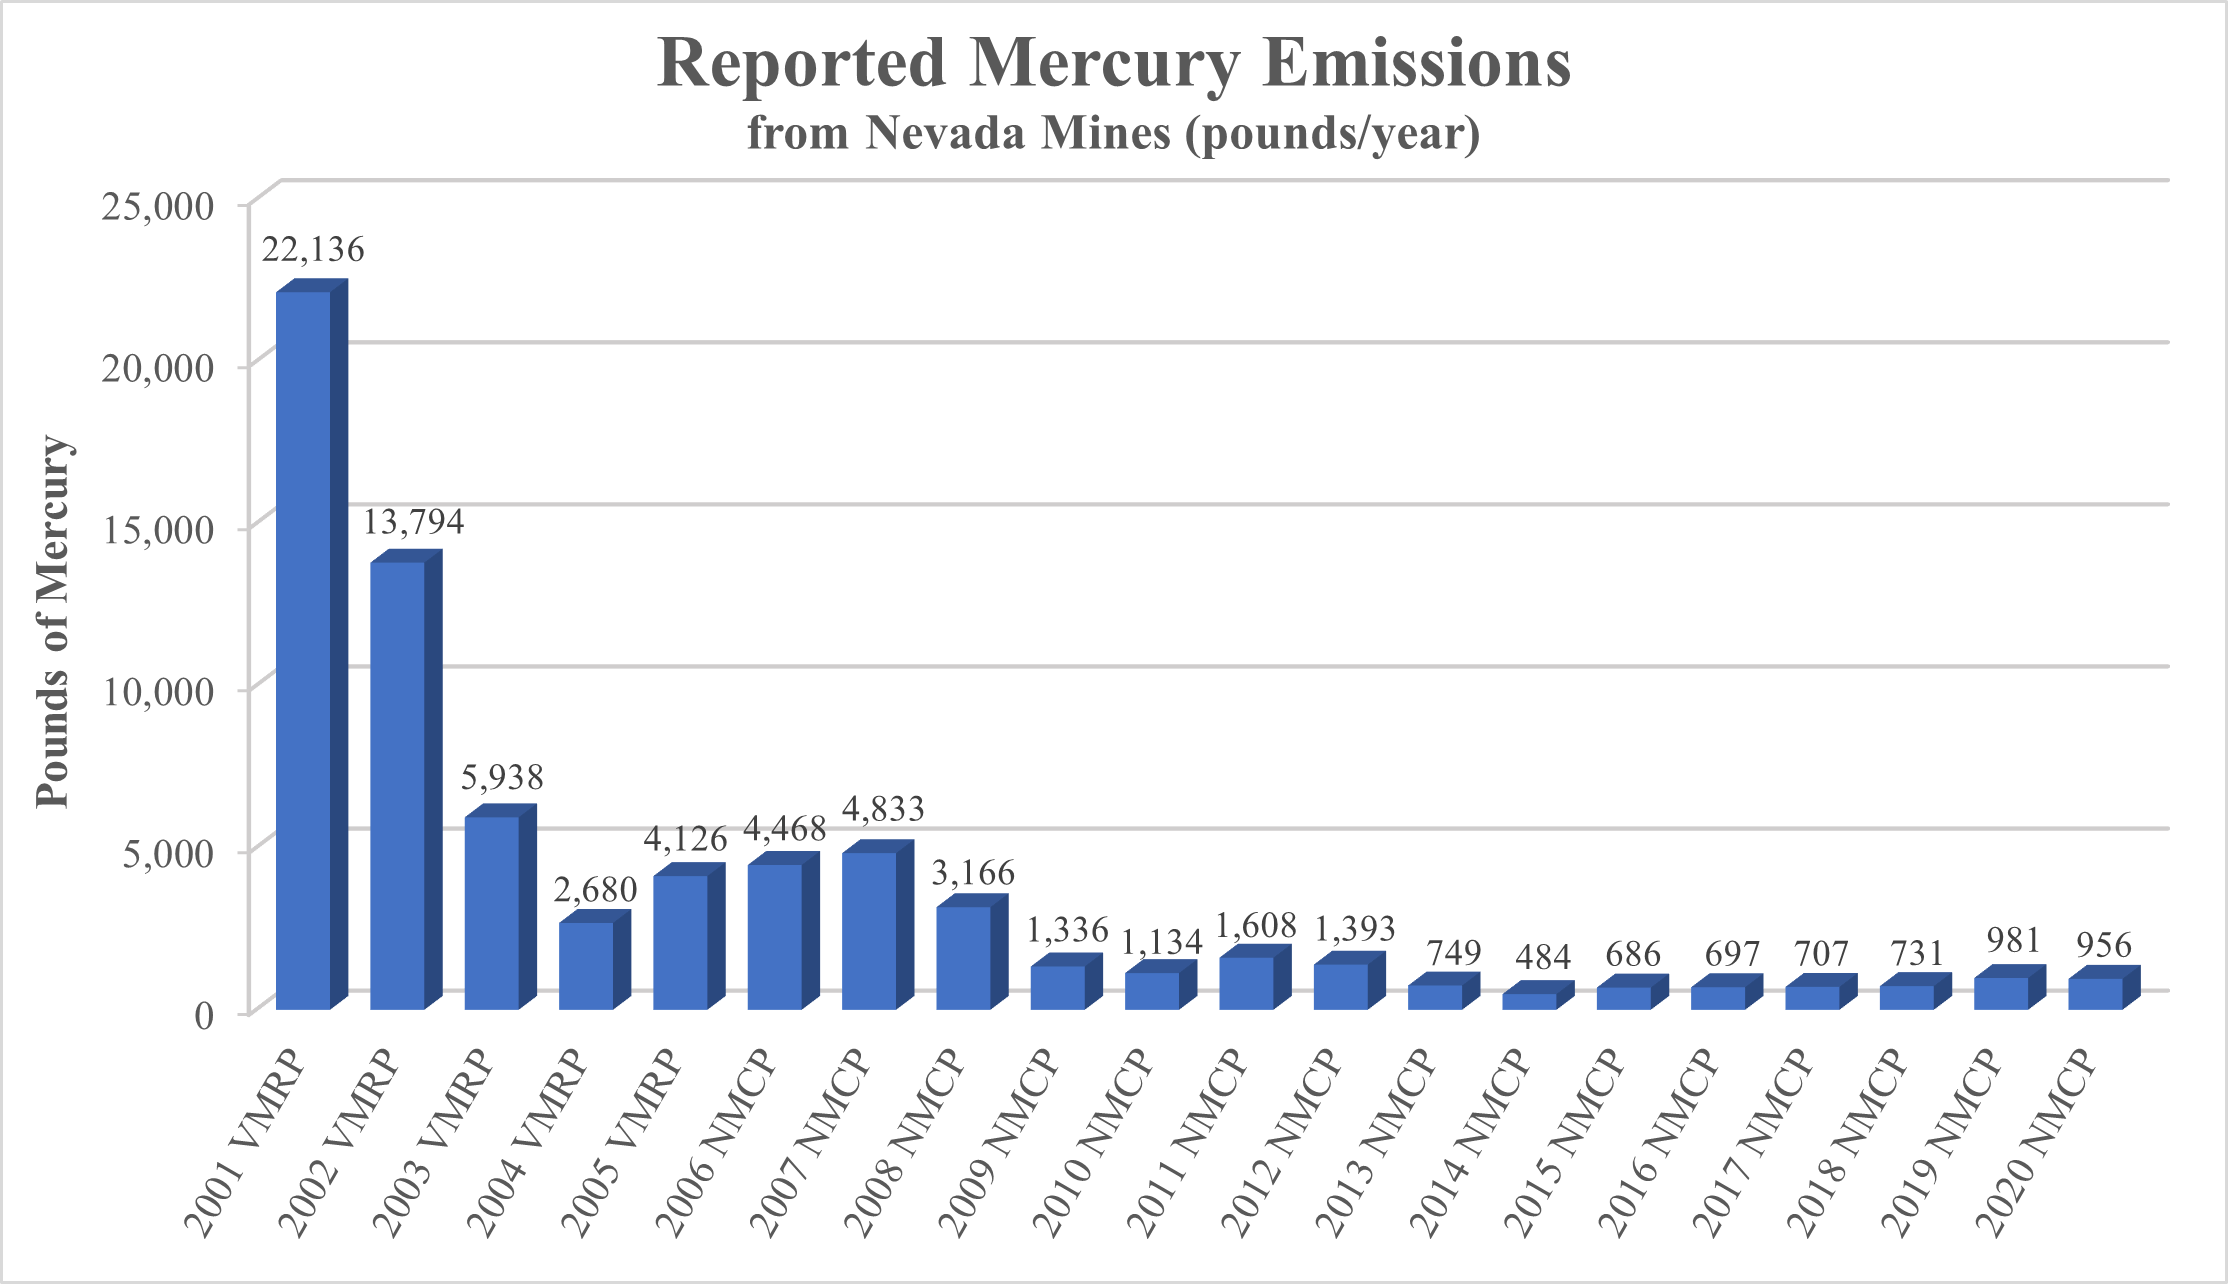 Illustrated facility mercury emissions in Nevada 2001-2020